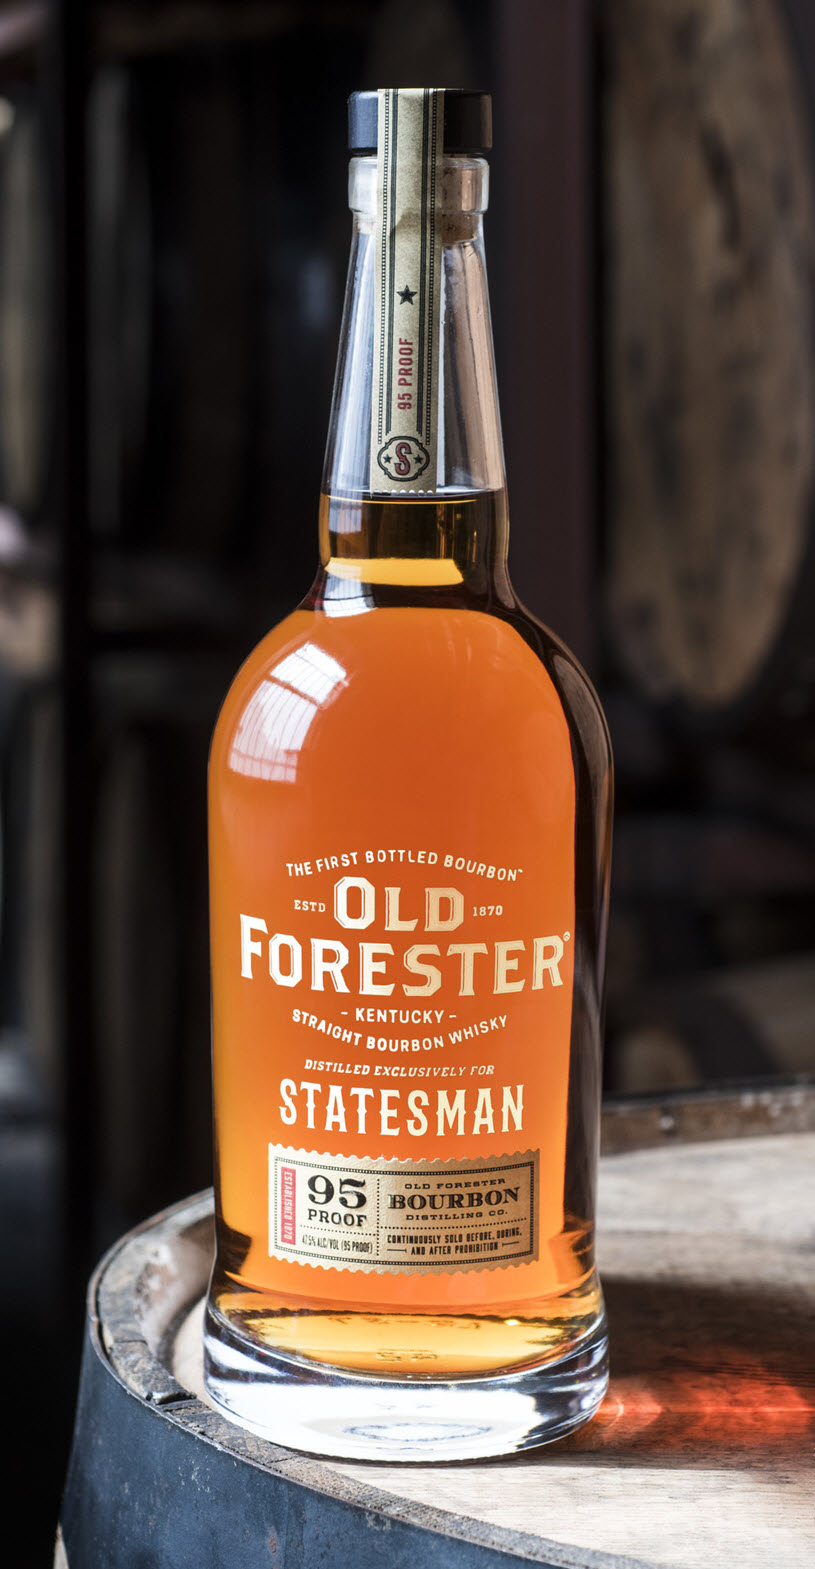 Old Forester Kentucky Straight Bourbon Whiskey - Statesman, Whiskey Row Series Bourbon